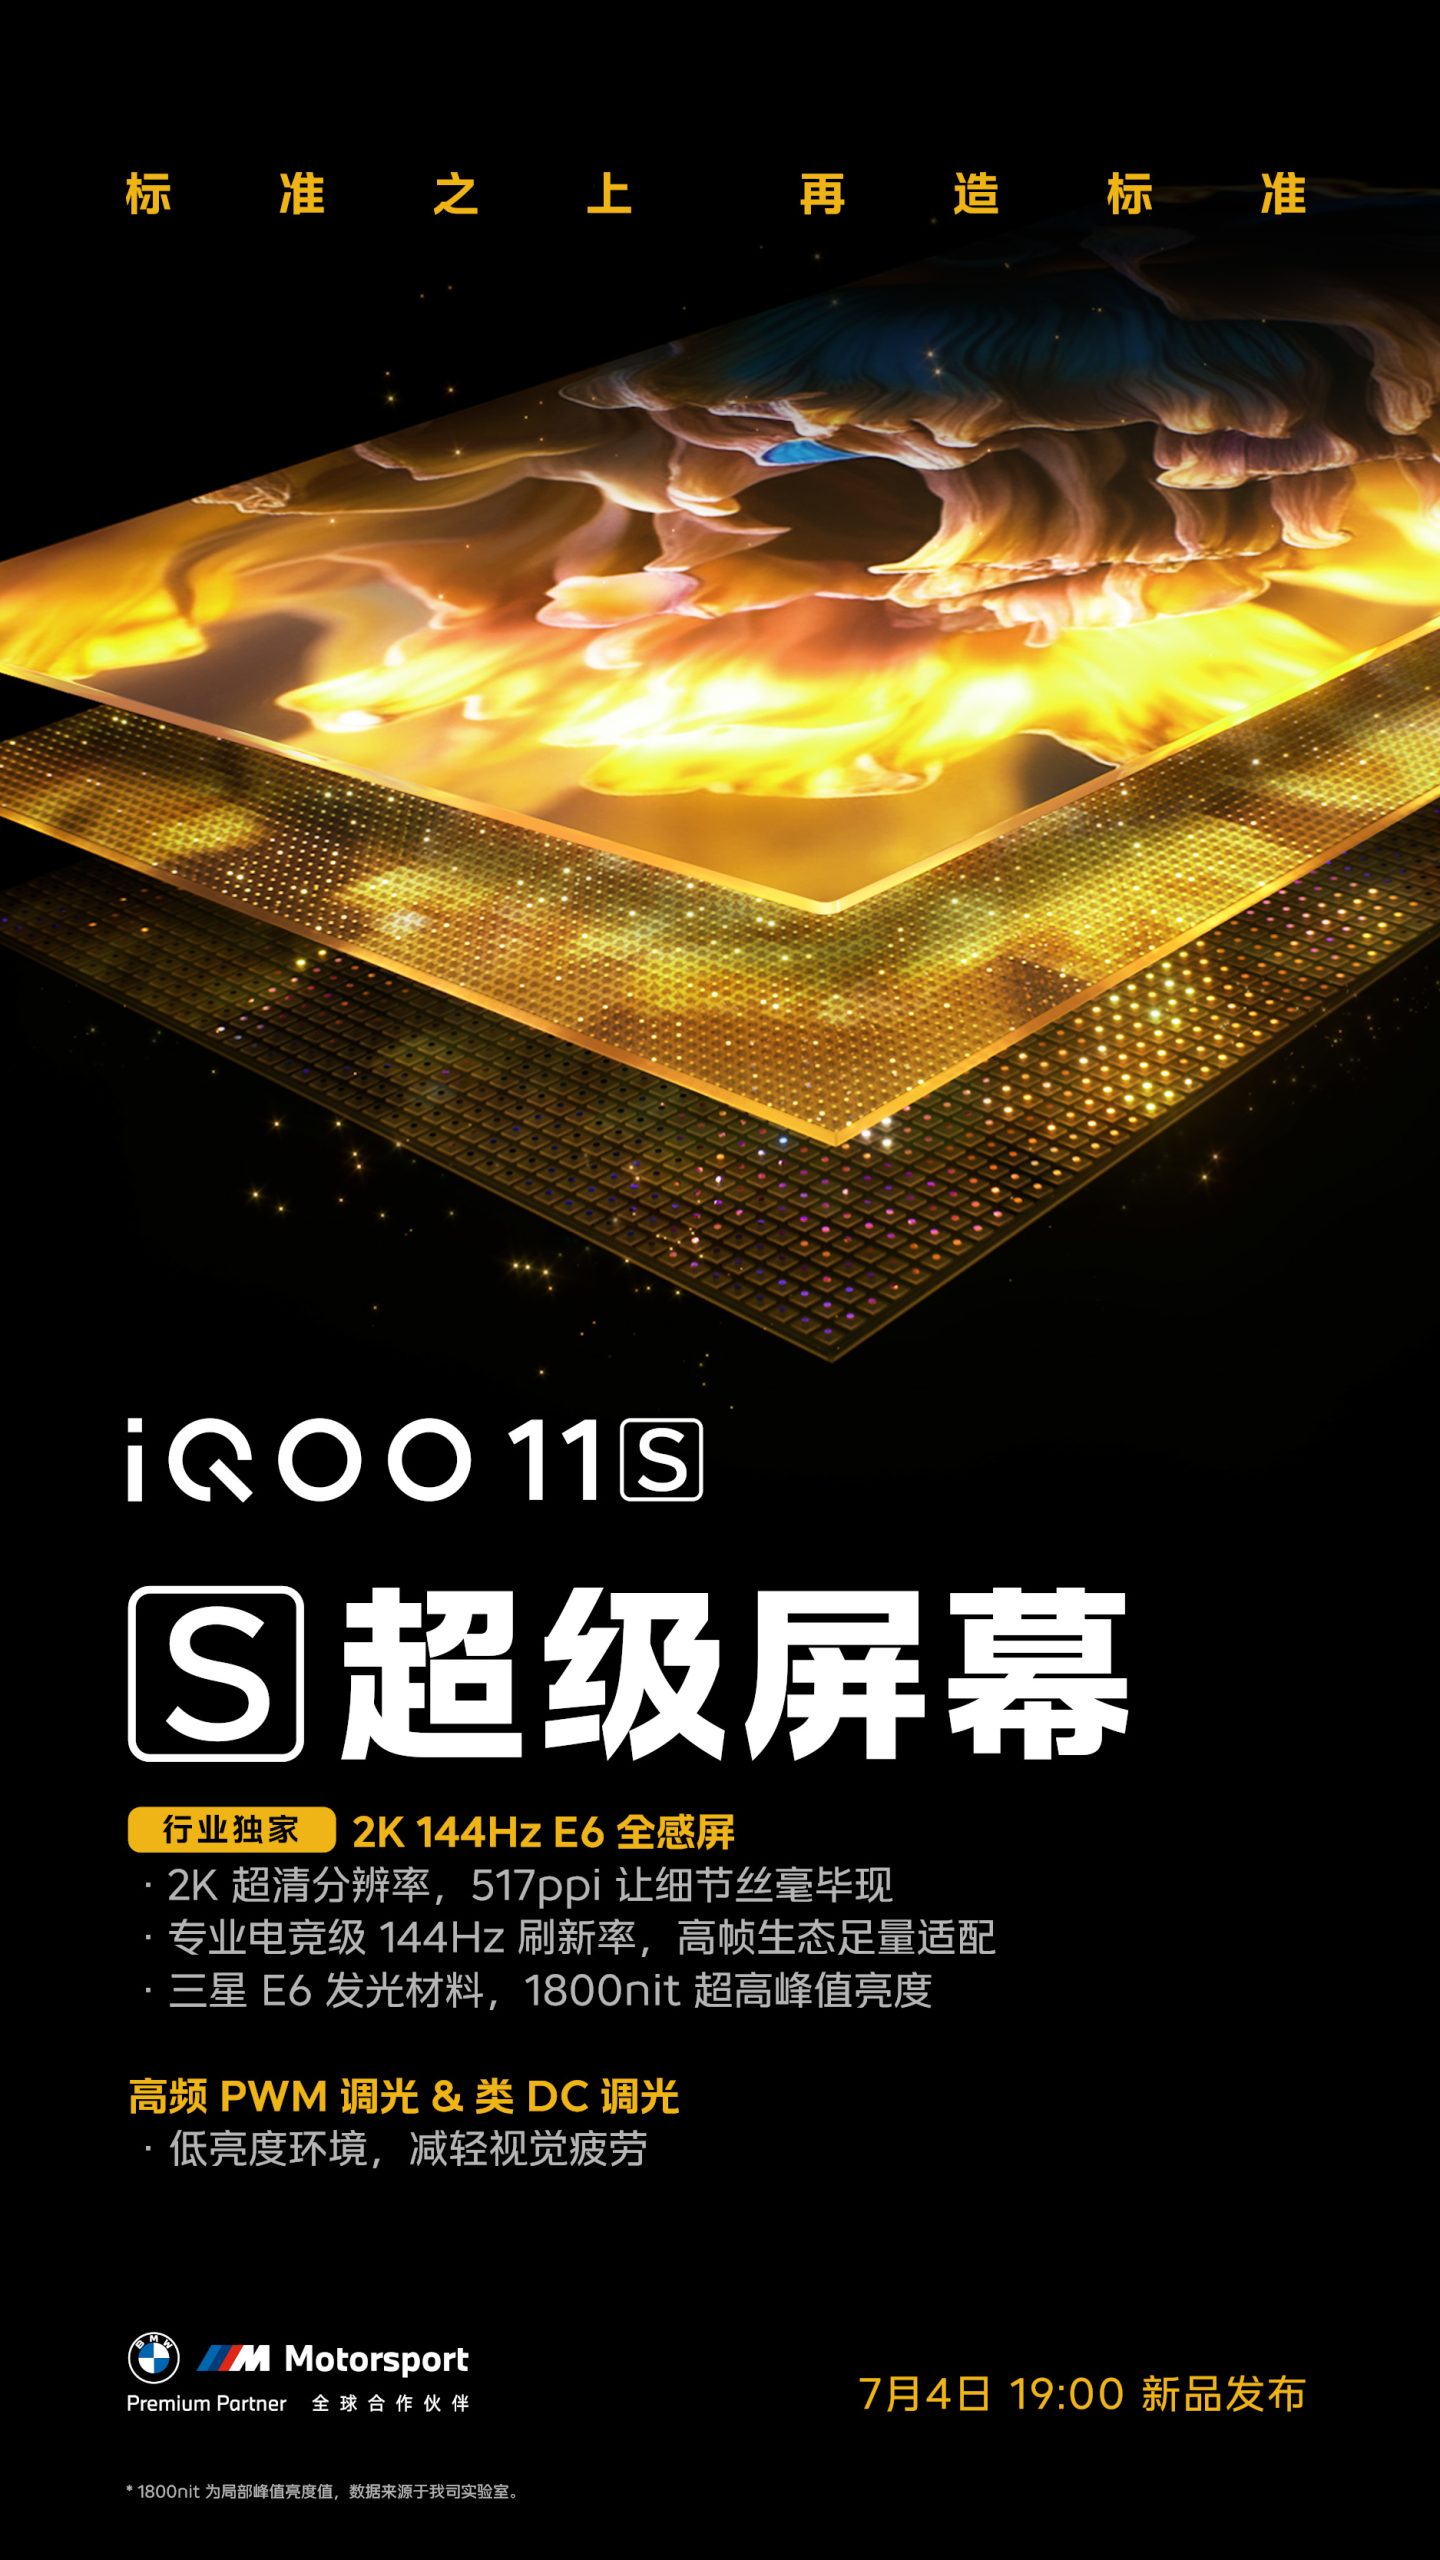 iQOO 11S E6 AMOLED display